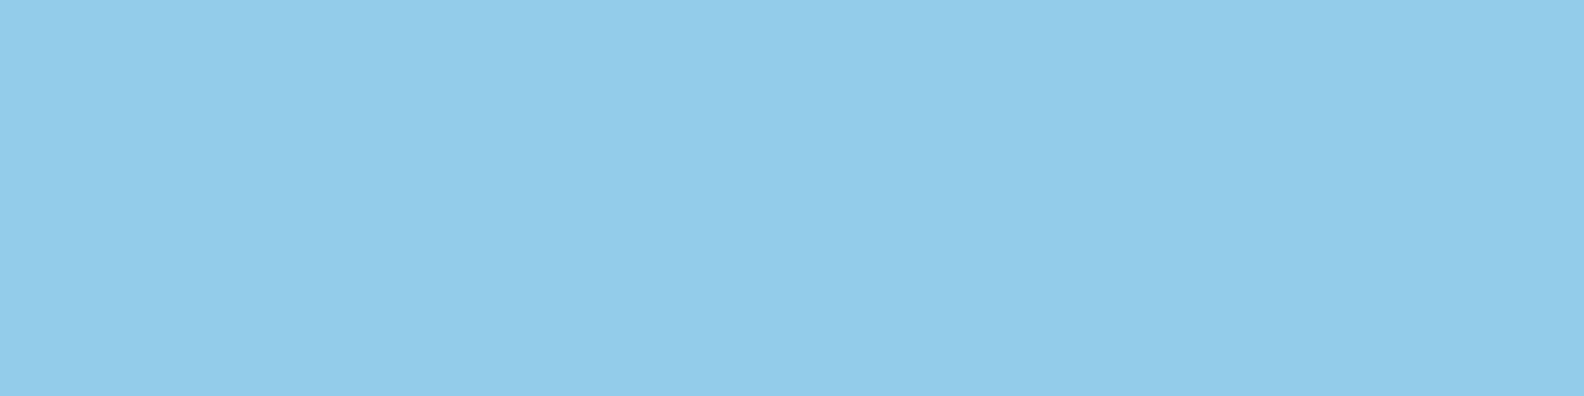 1584x396 Light Cornflower Blue Solid Color Background